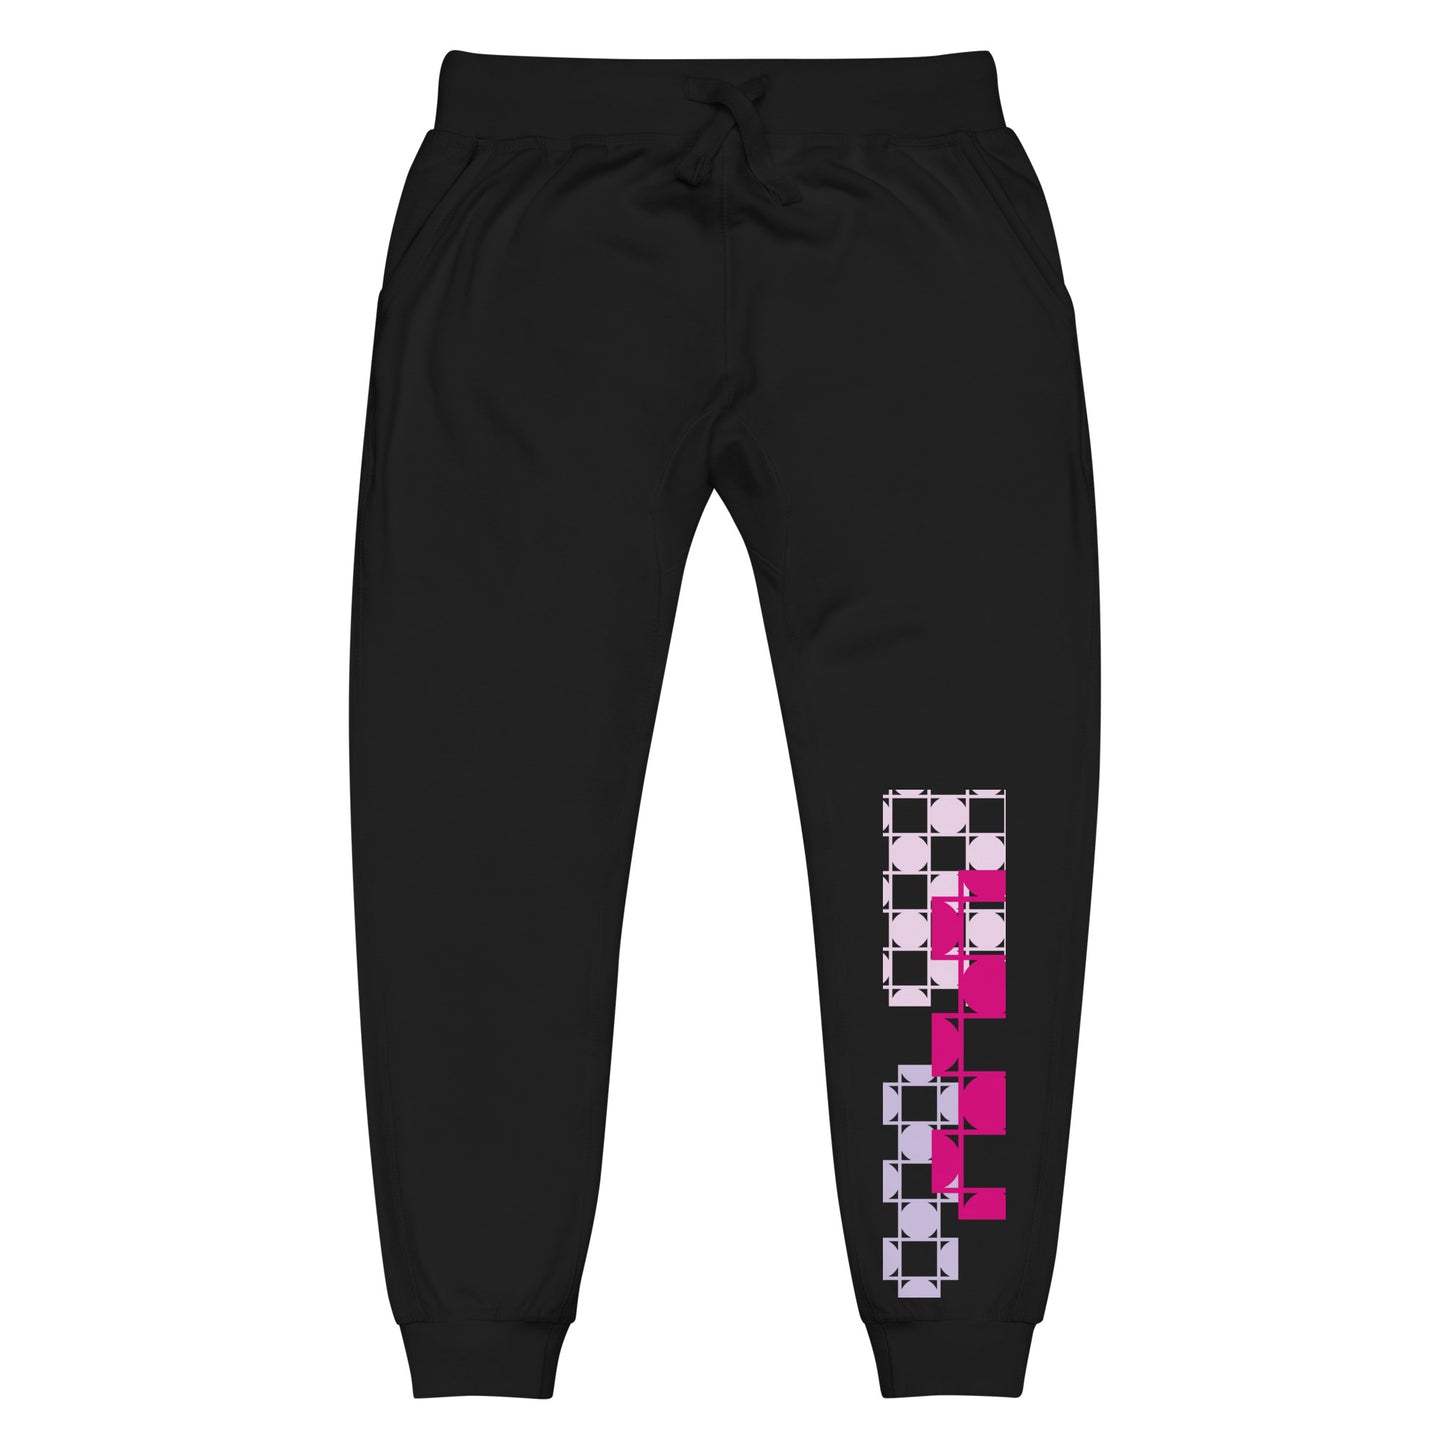 Happy Coach Checker Print Unisex fleece sweatpants